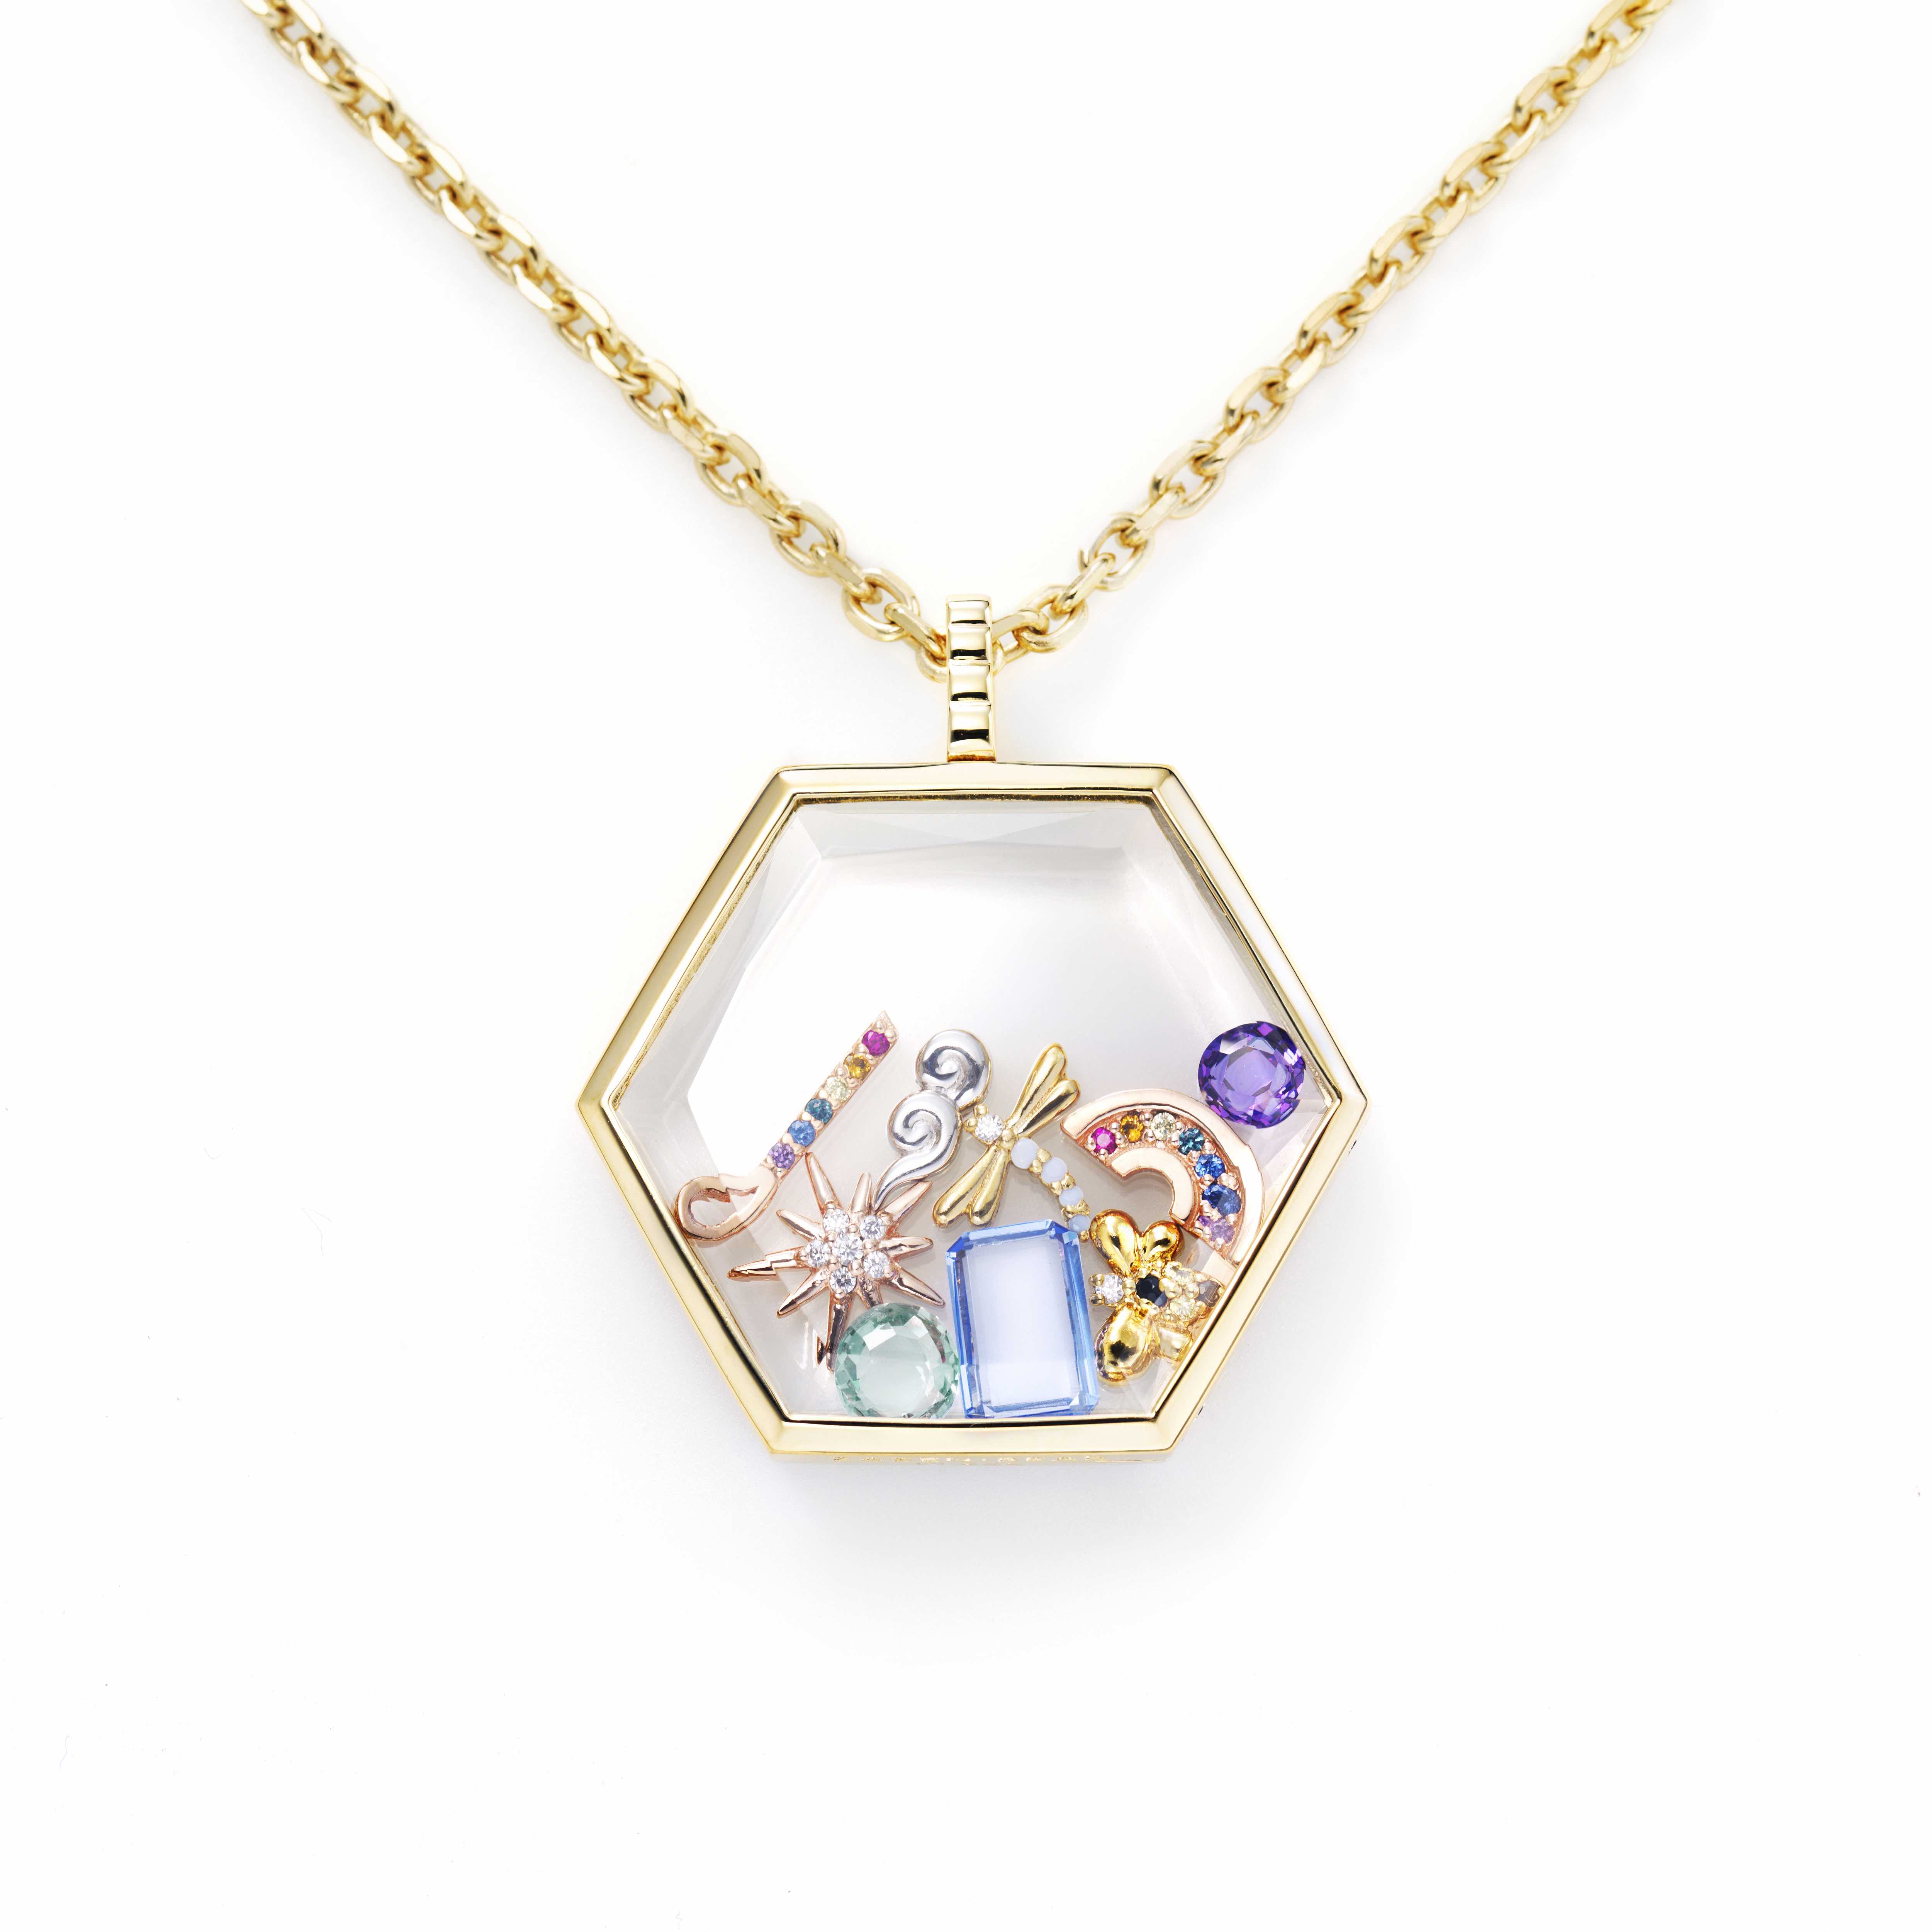 Zazen Bear's "Stardust" pendant with charms